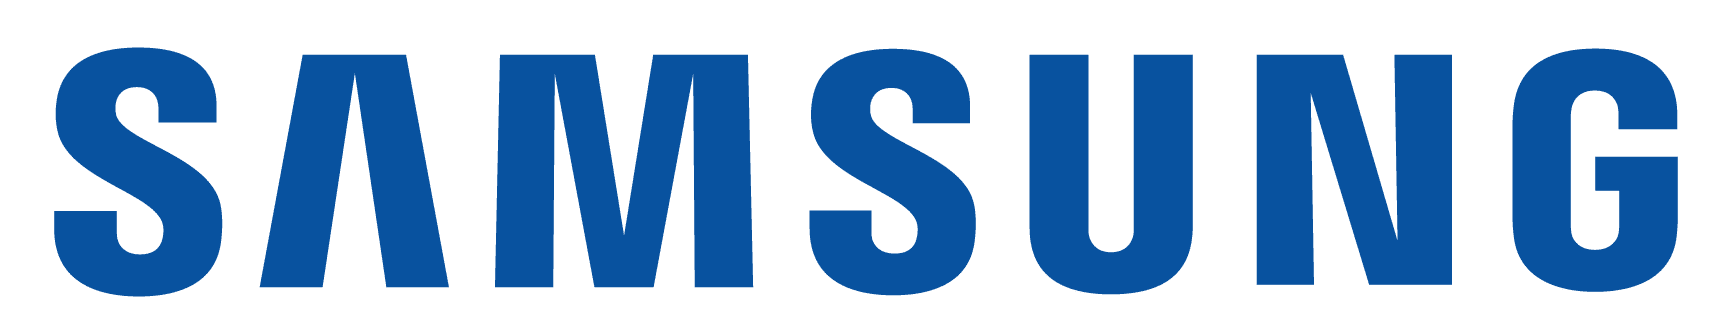 Samsung logo 5